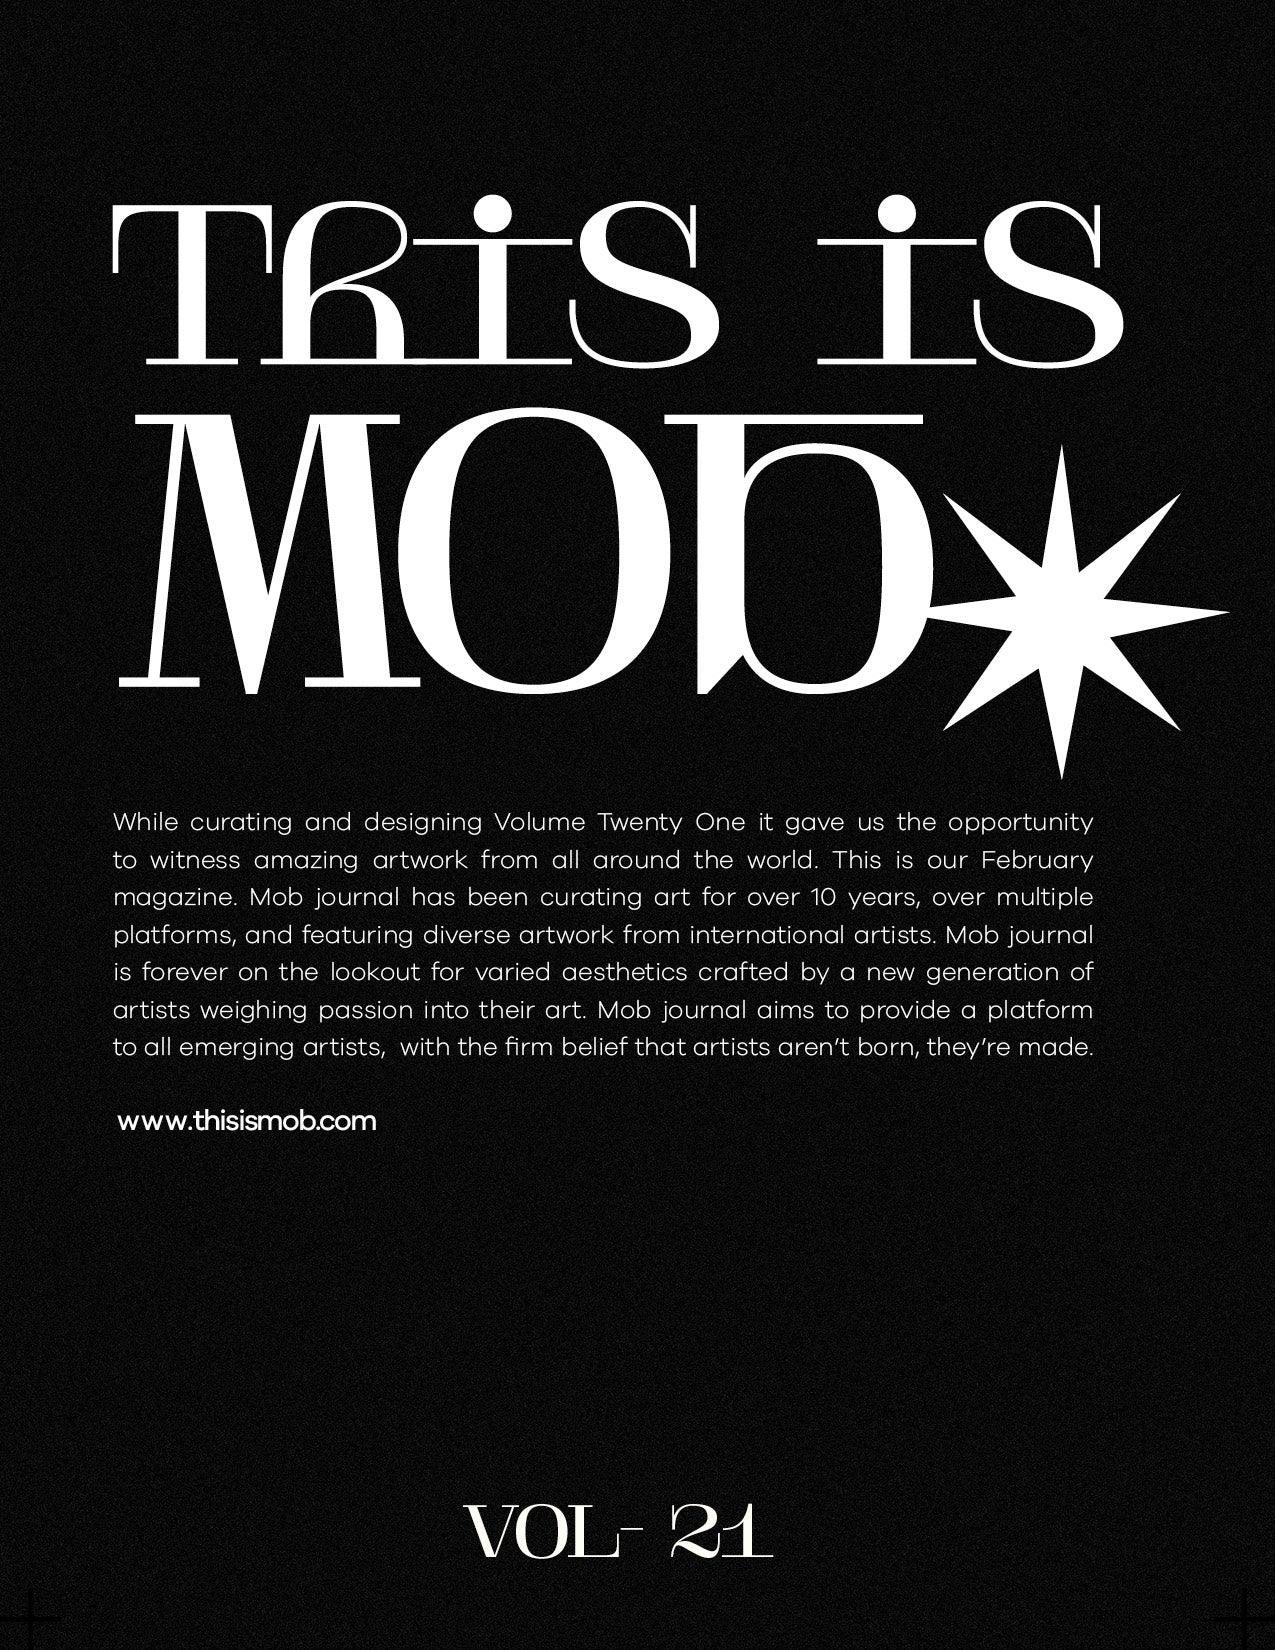 MOB JOURNAL | VOLUME TWENTY ONE | ISSUE #55 - Mob Journal